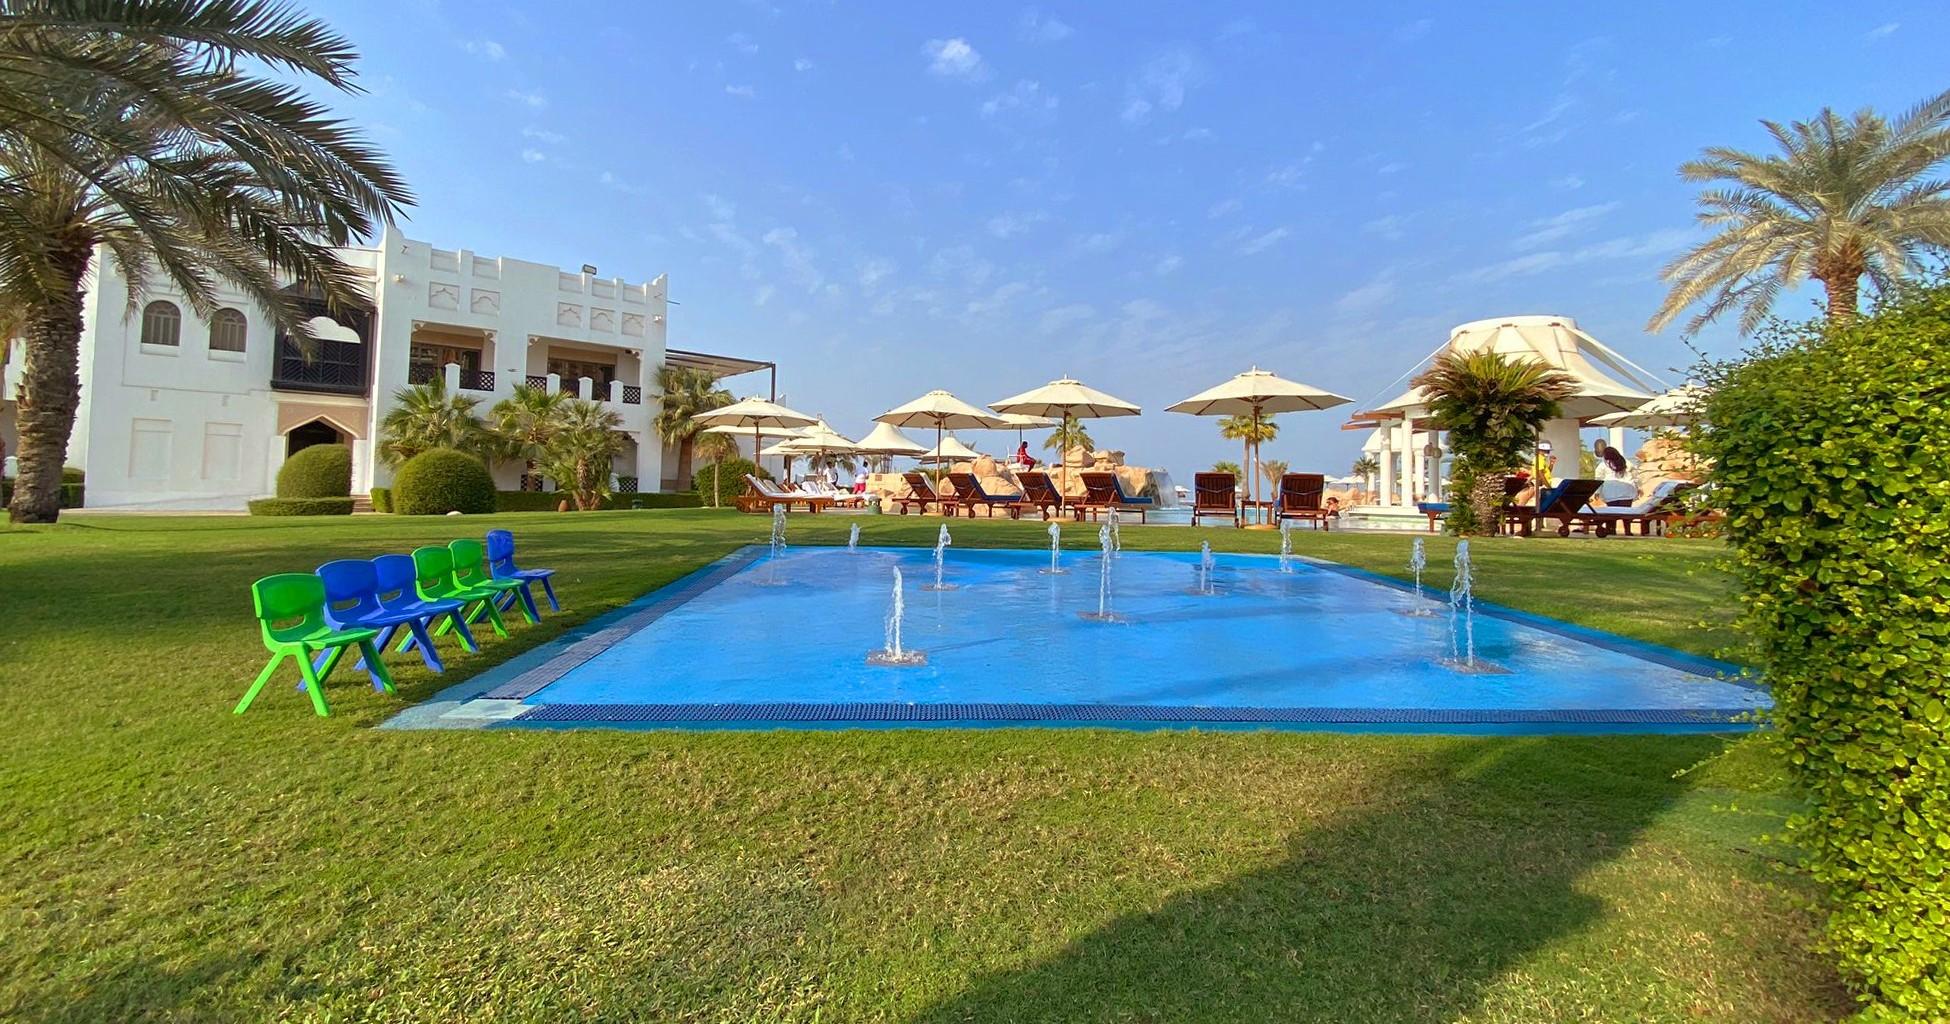 The Ritz-Carlton Sharq Village, Doha Kids Club Water Play Area